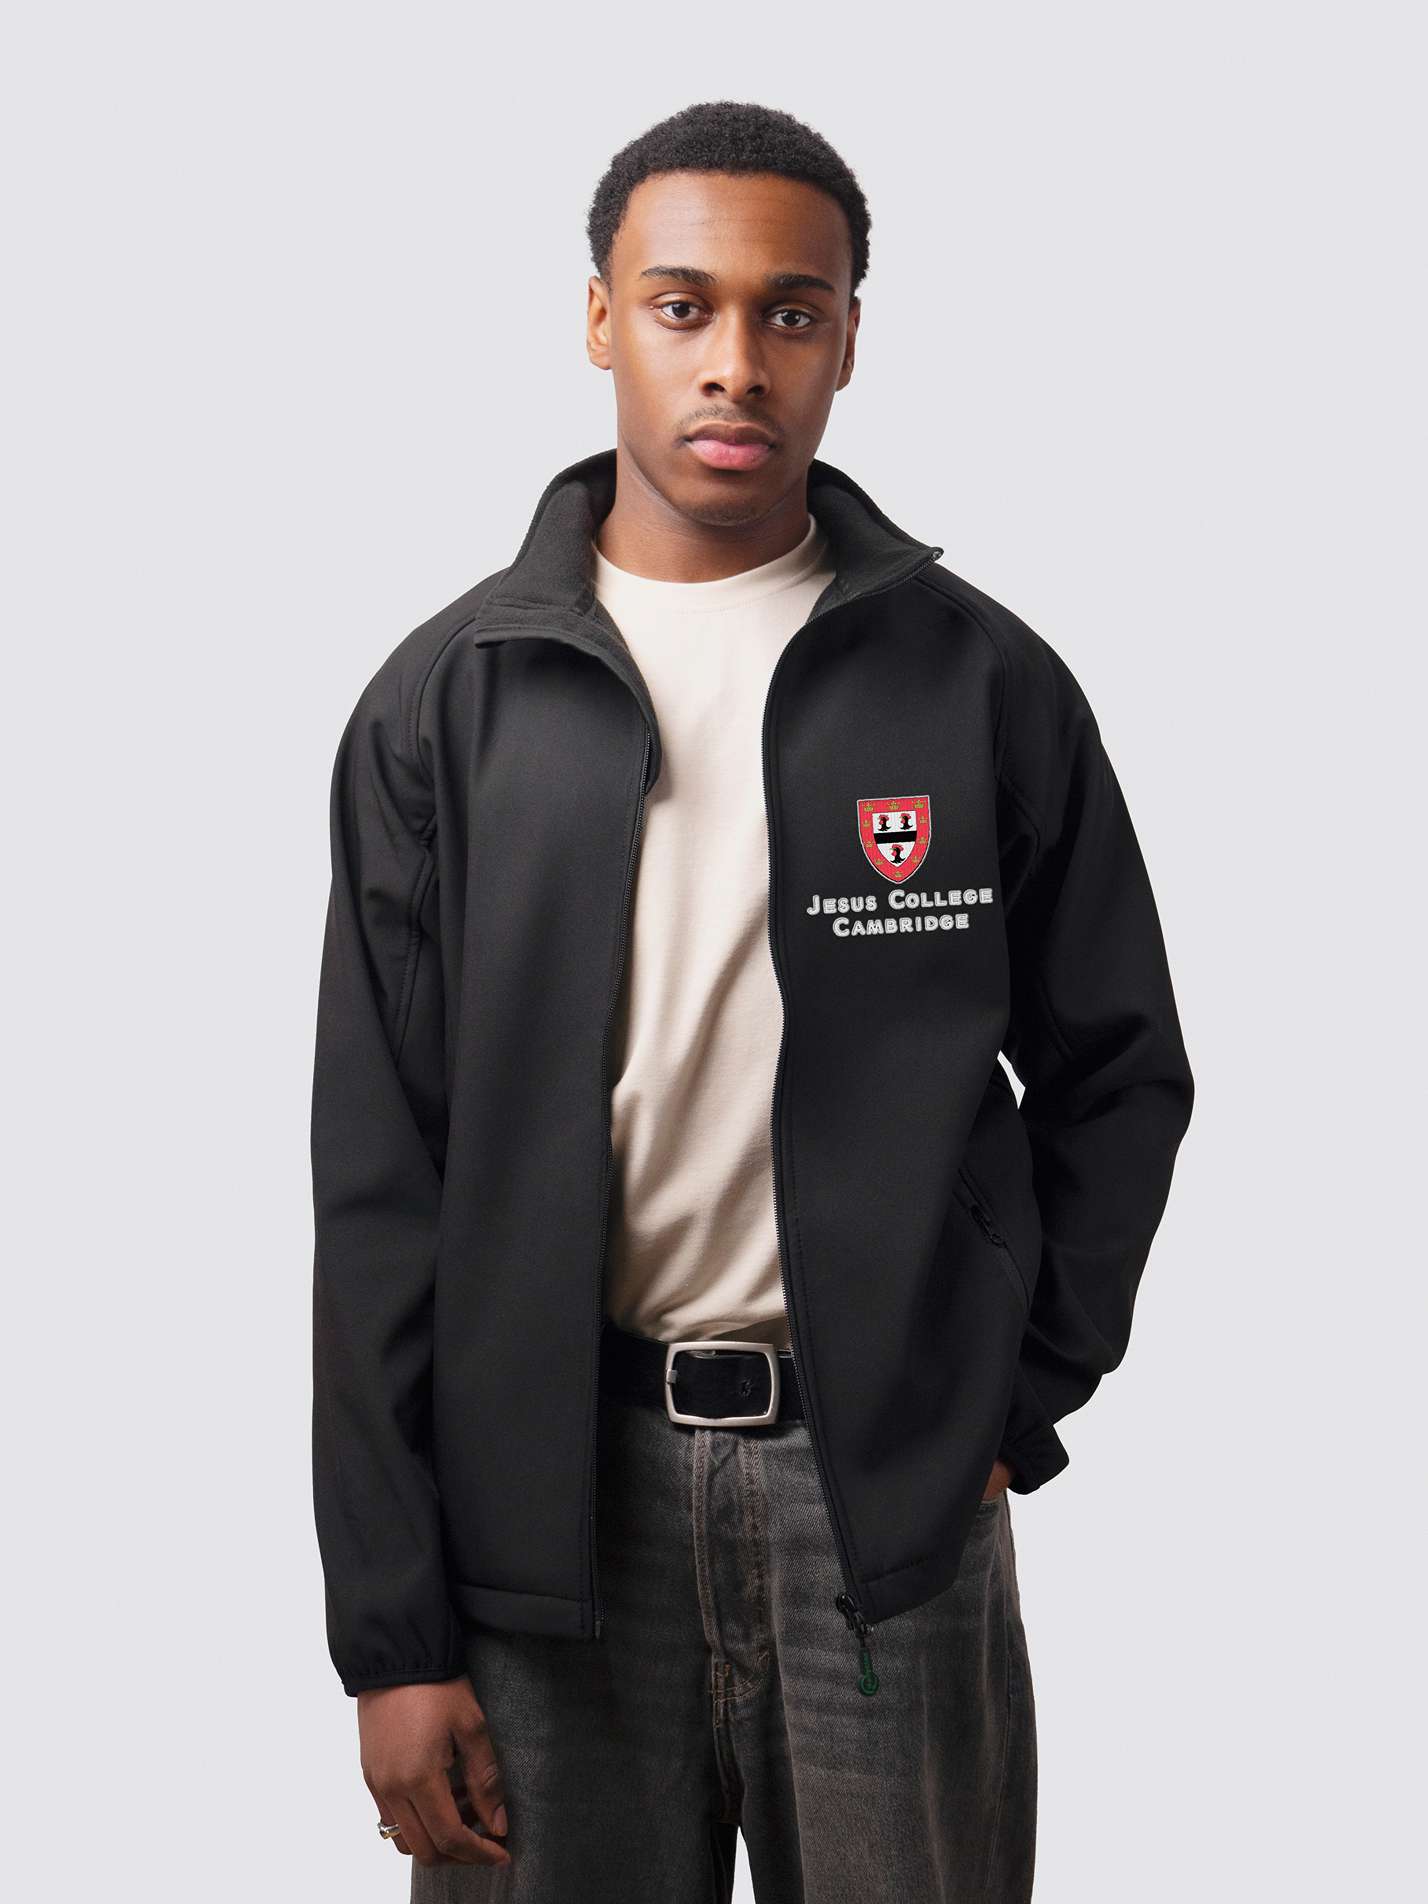 Jesus College Cambridge JCR Sustainable Men's Soft Shell Jacket